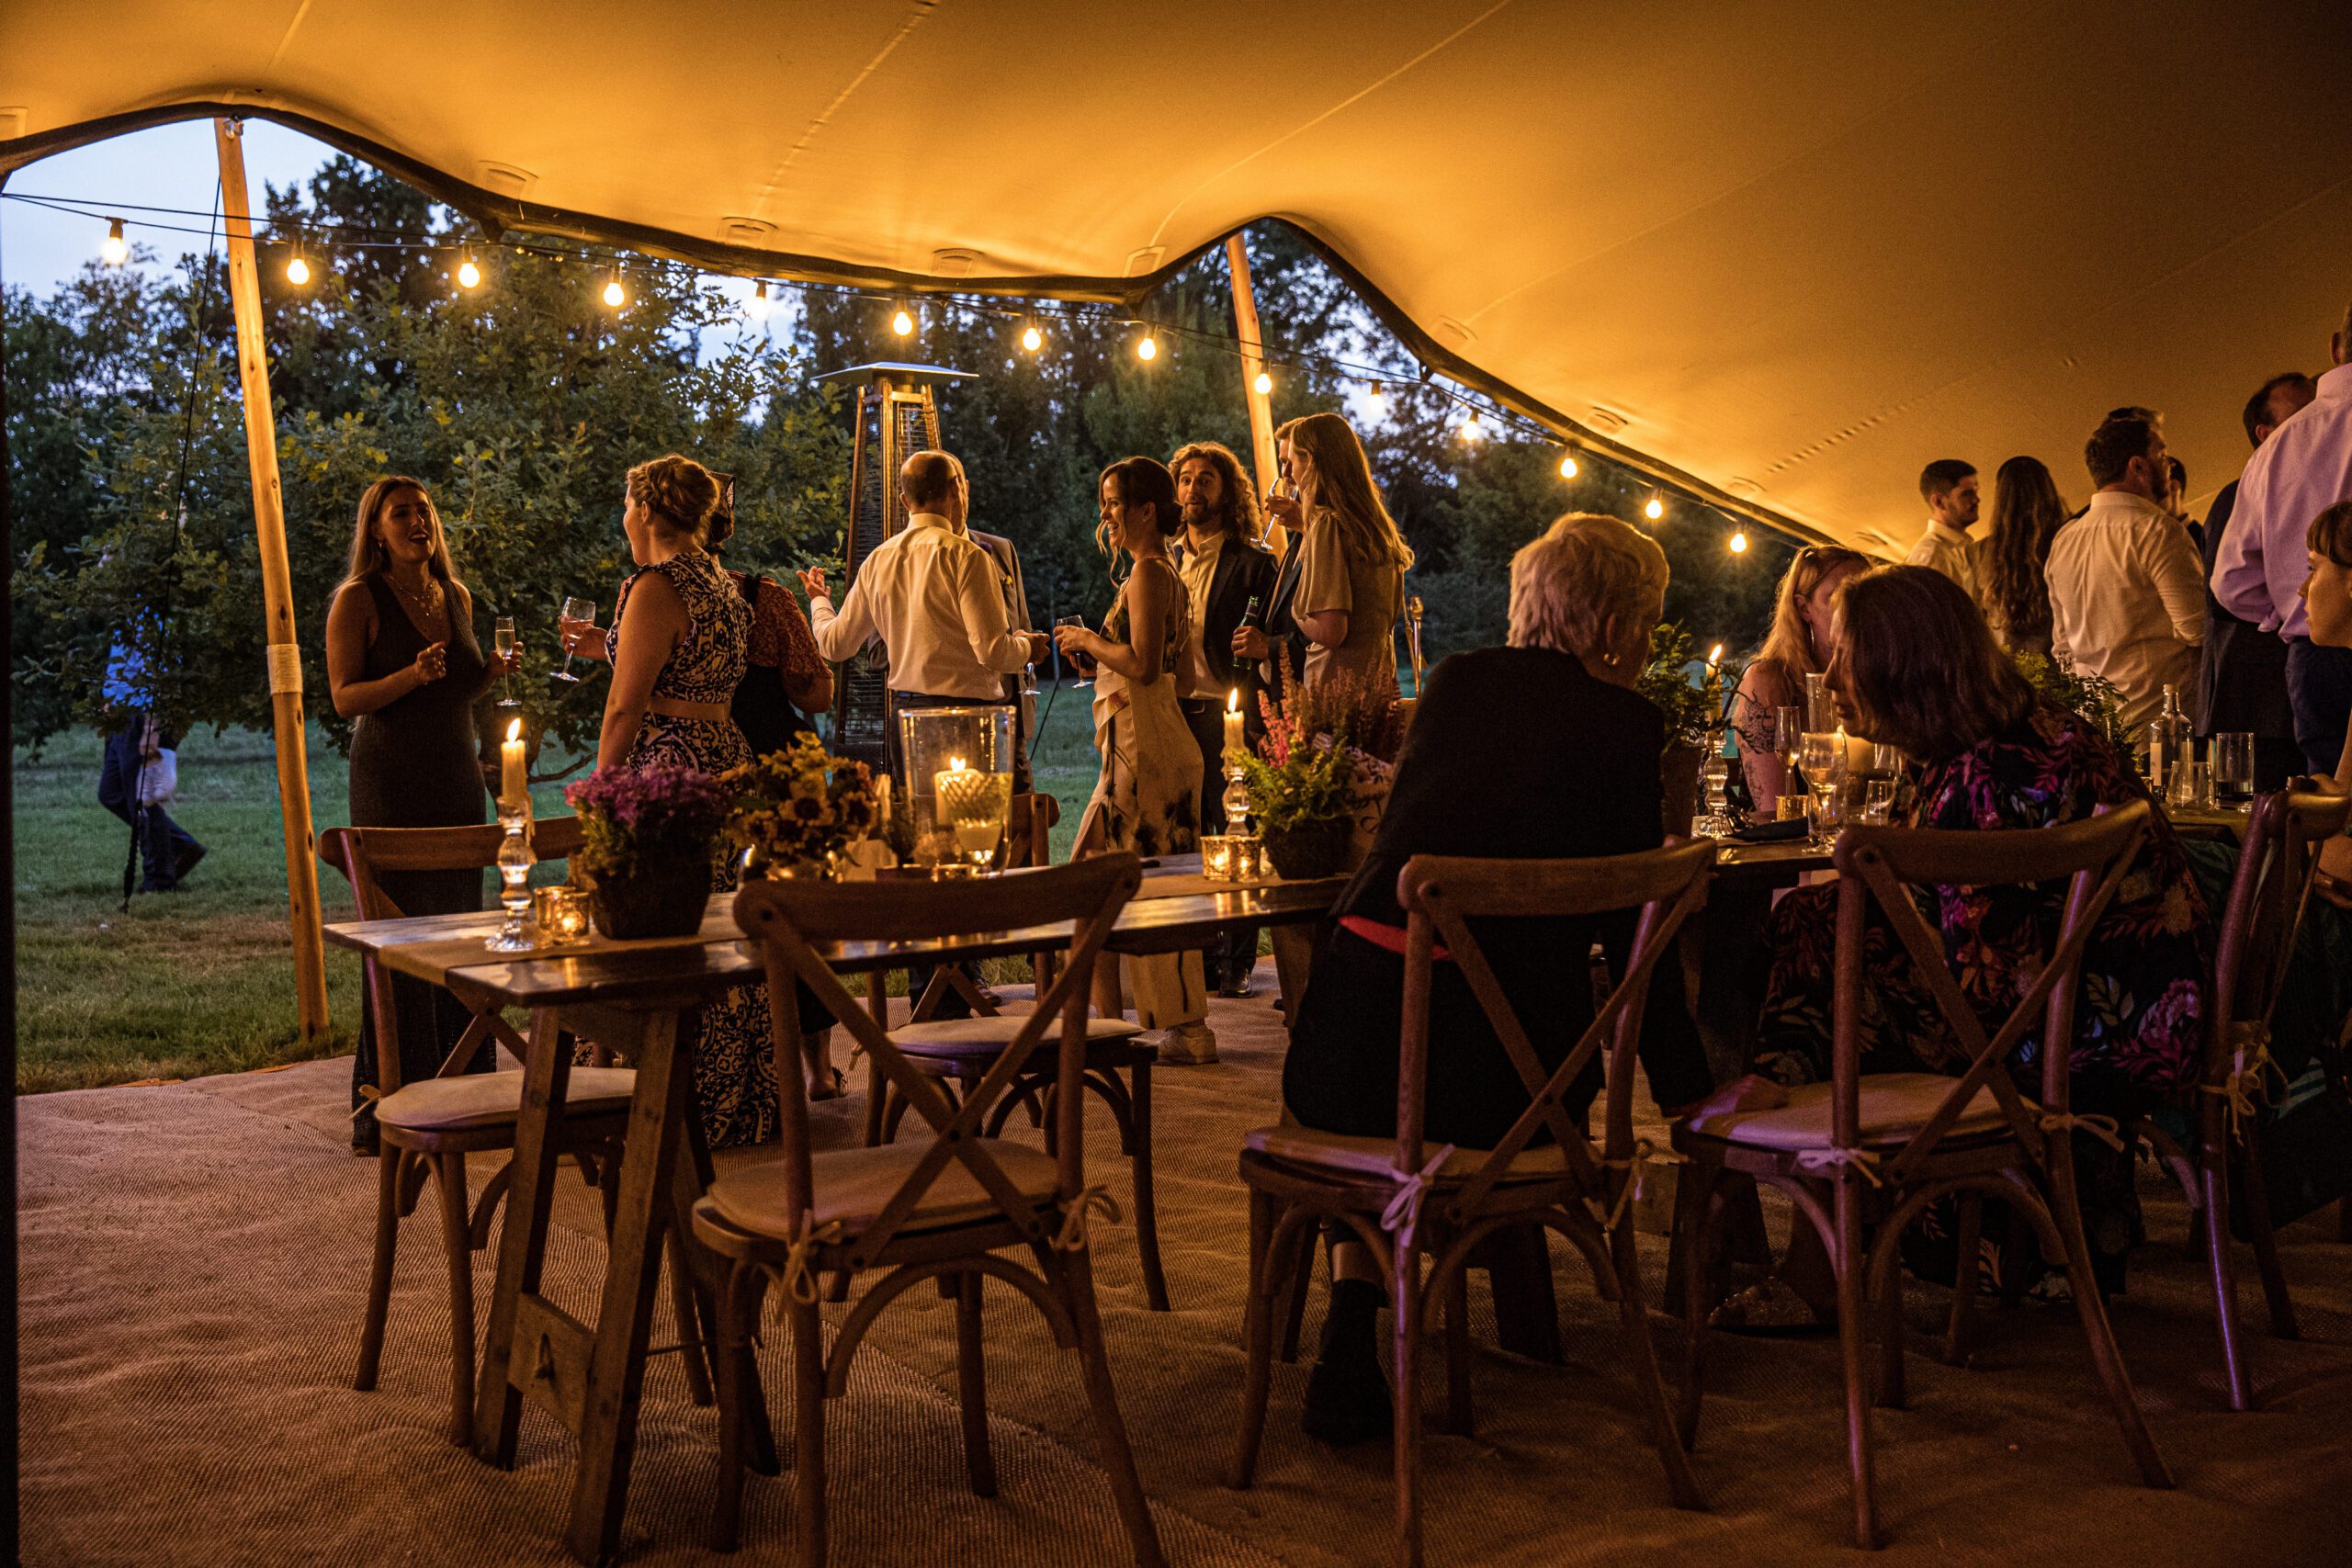 the guests mingle at hertfordshire garden wedding at dusk